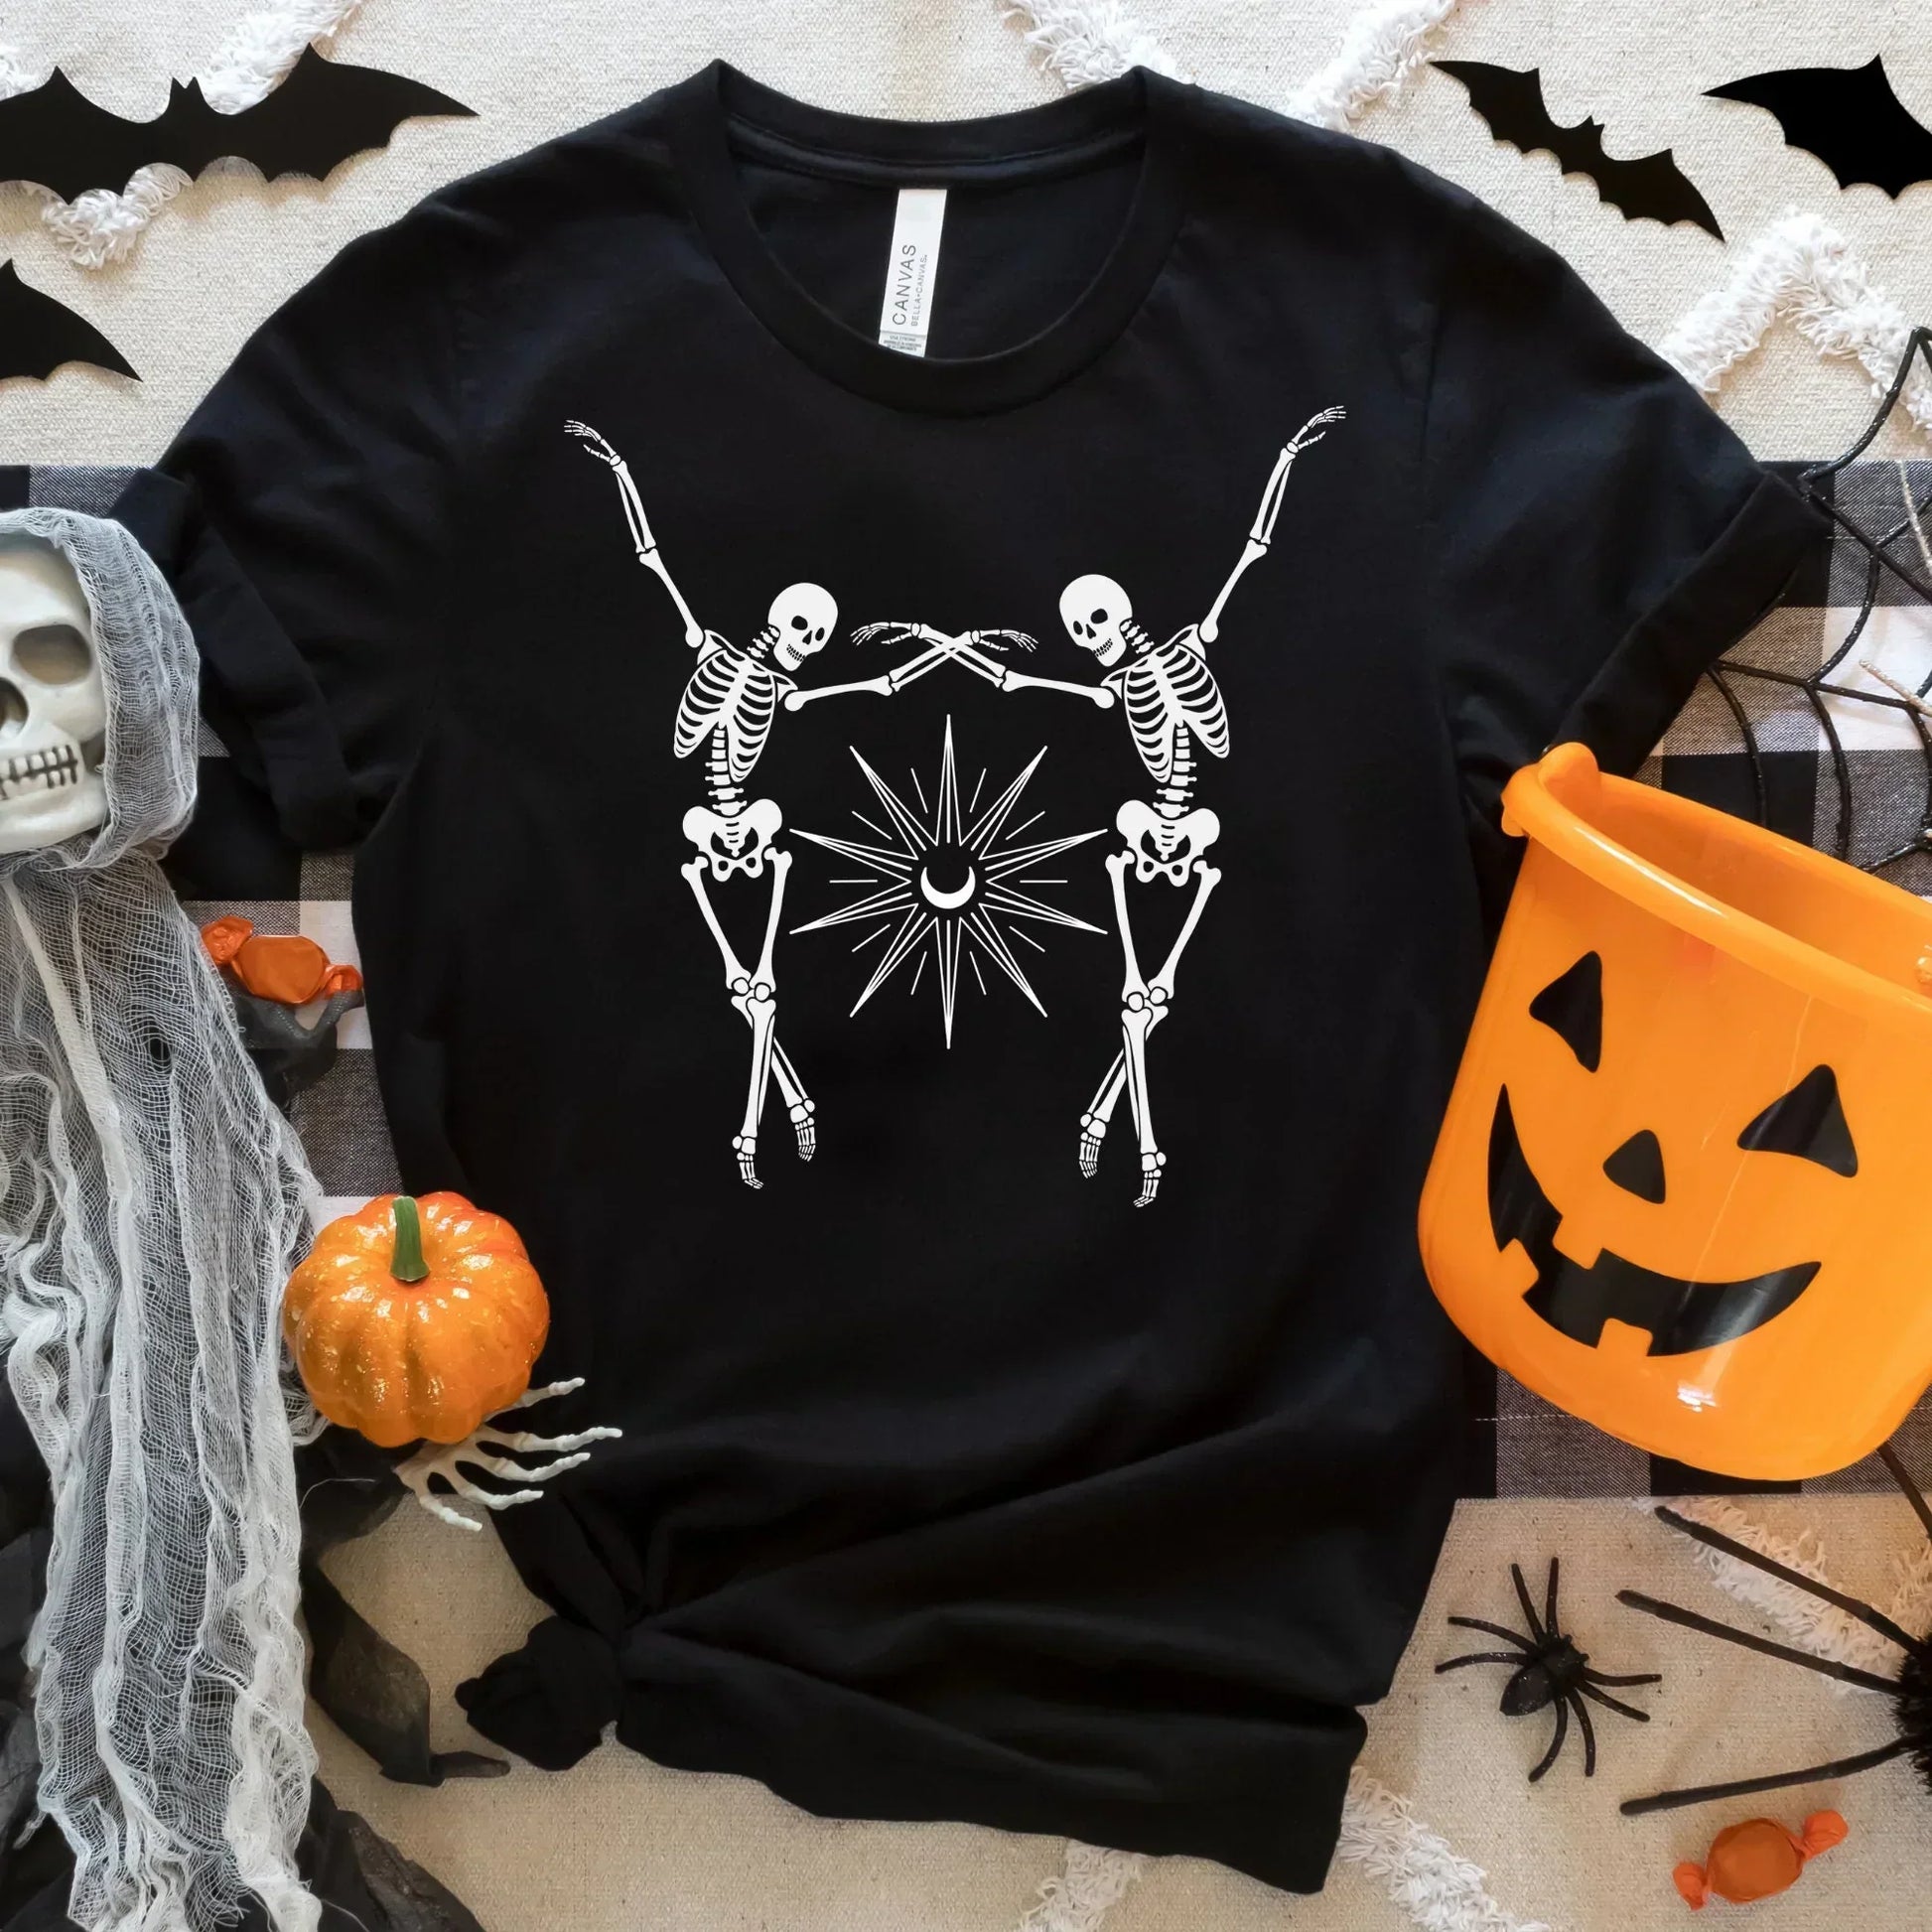 Halloween Sweatshirt, Gothic Tshirt, Dancing Skeletons, Fall Sweater, Skeleton Shirt, Mystical Women's Hoodie, Gift for Her, Fun Party Tee HMDesignStudioUS